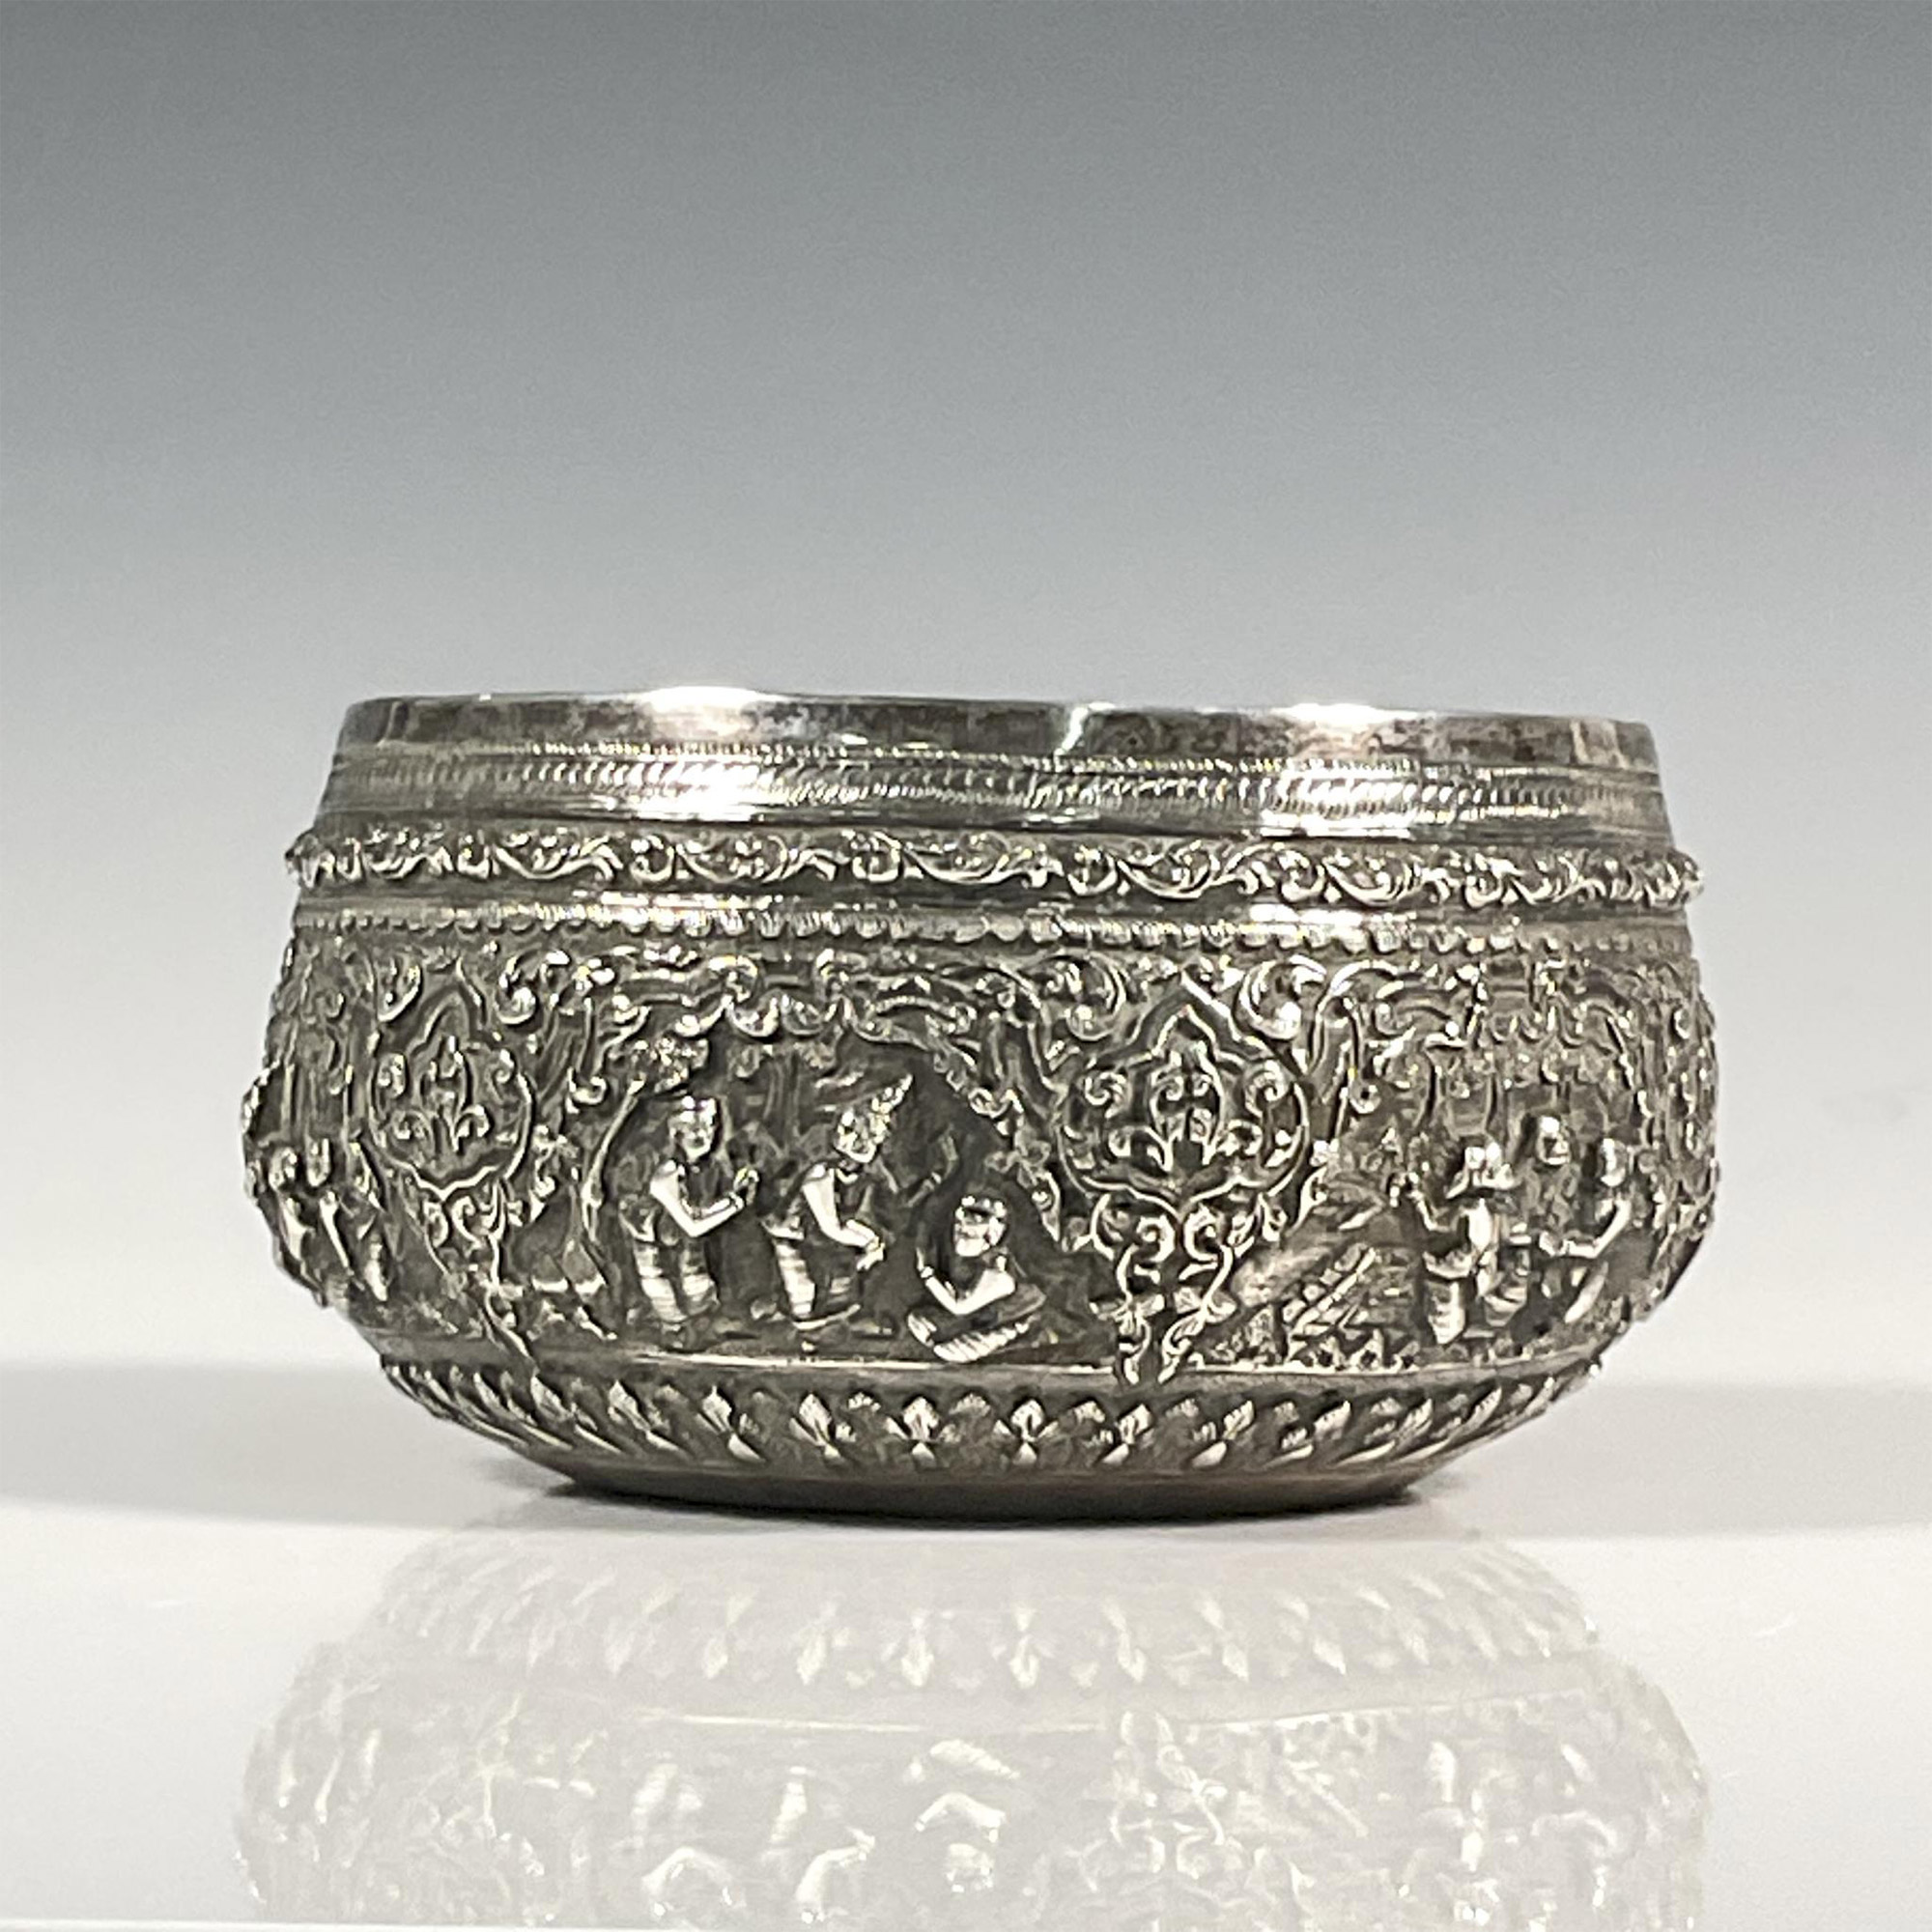 Coombes and Company Ltd. Burmese Silver Circular Bowl